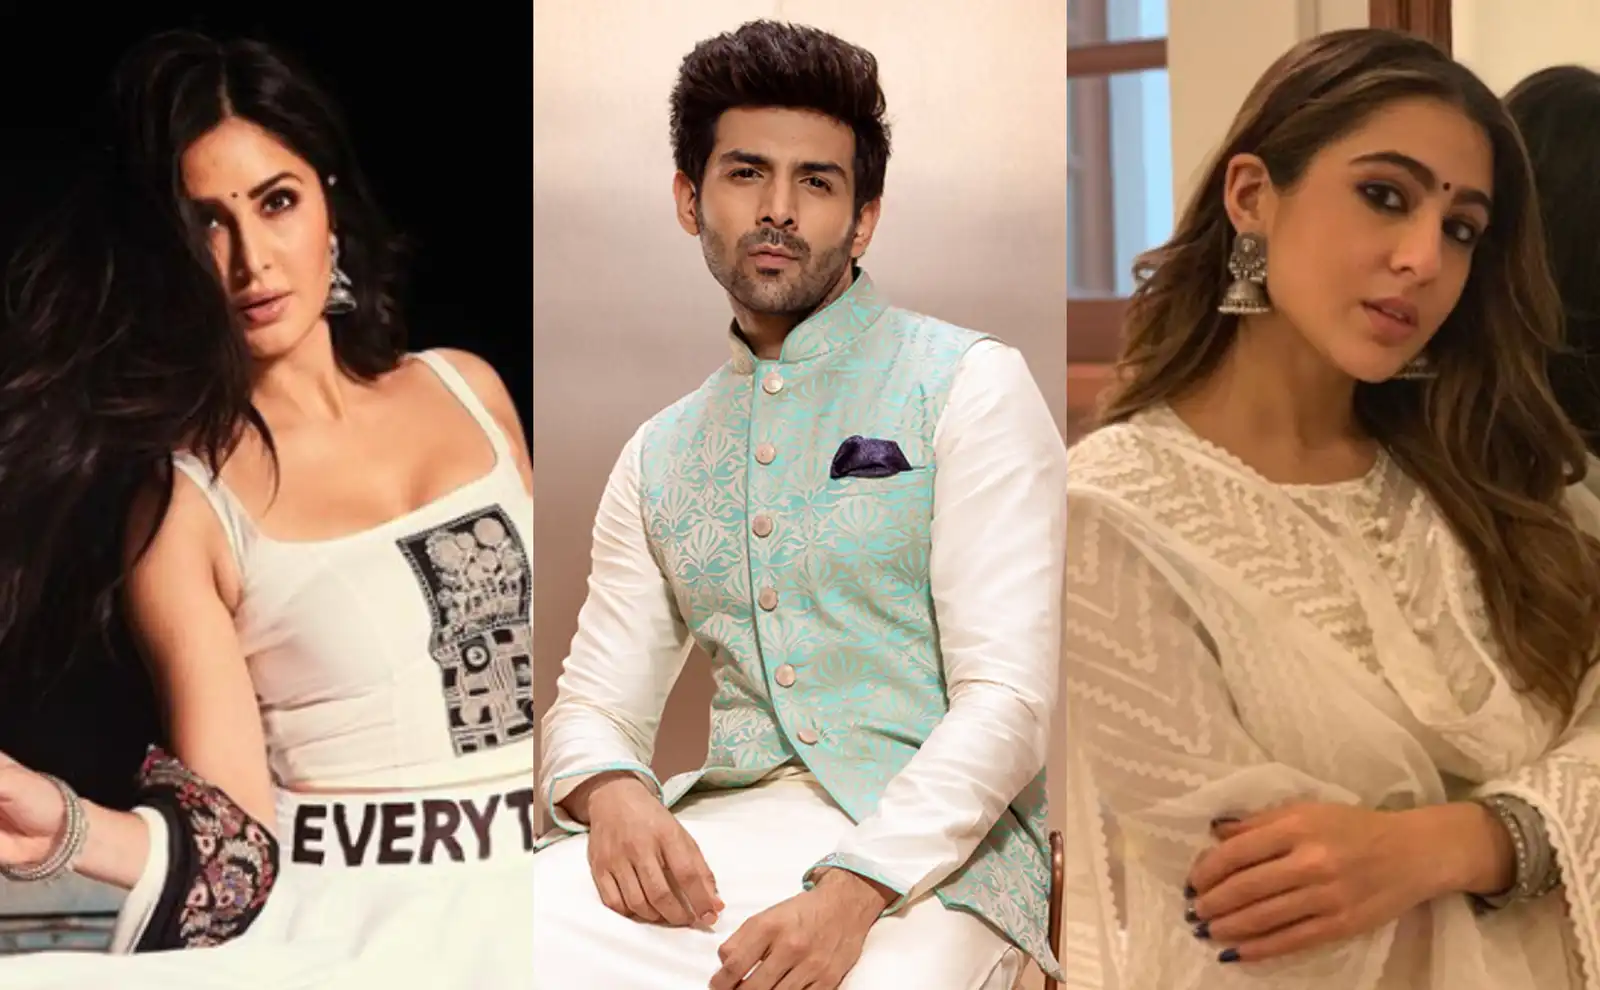 Happy Holi 2020: From Kartik Aaryan To Katrina Kaif, Bollywood Celebs Inspire Us With Their OOTDs